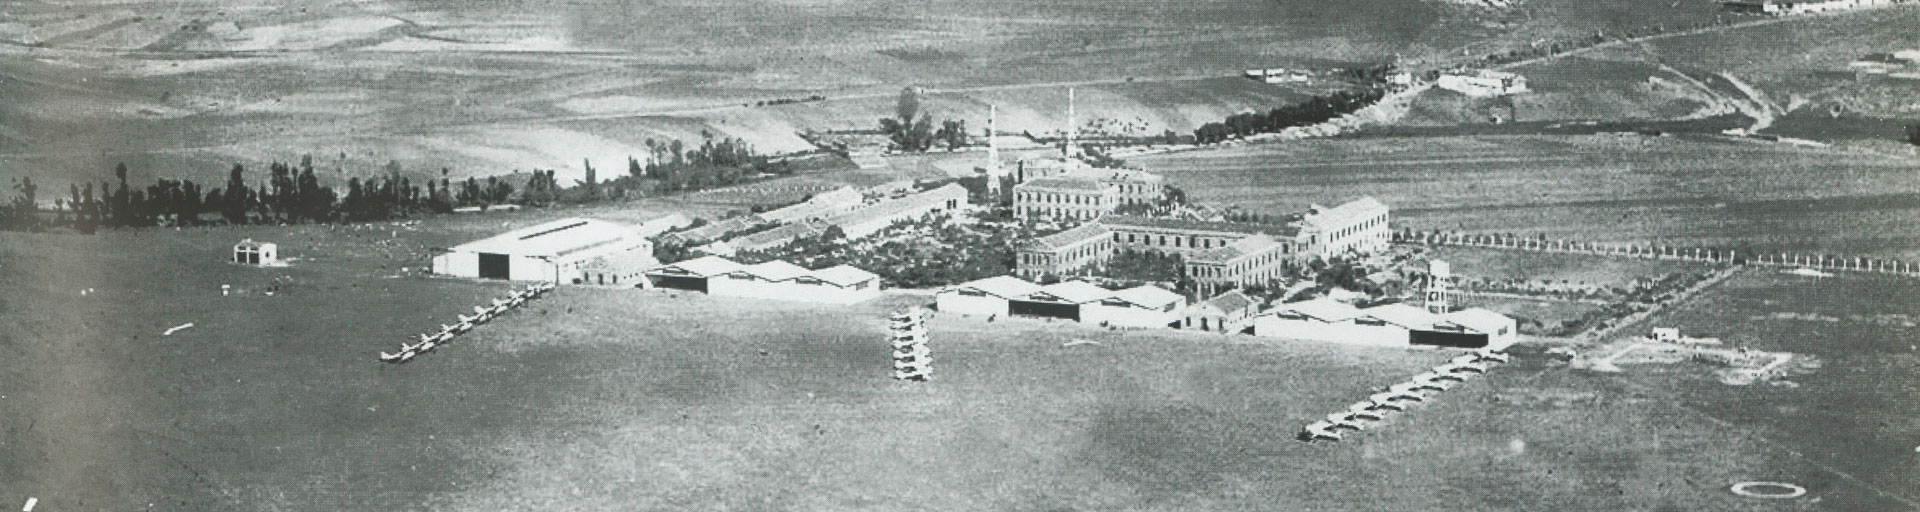 Imagen aérea histórica del Aeródromo Militar de León